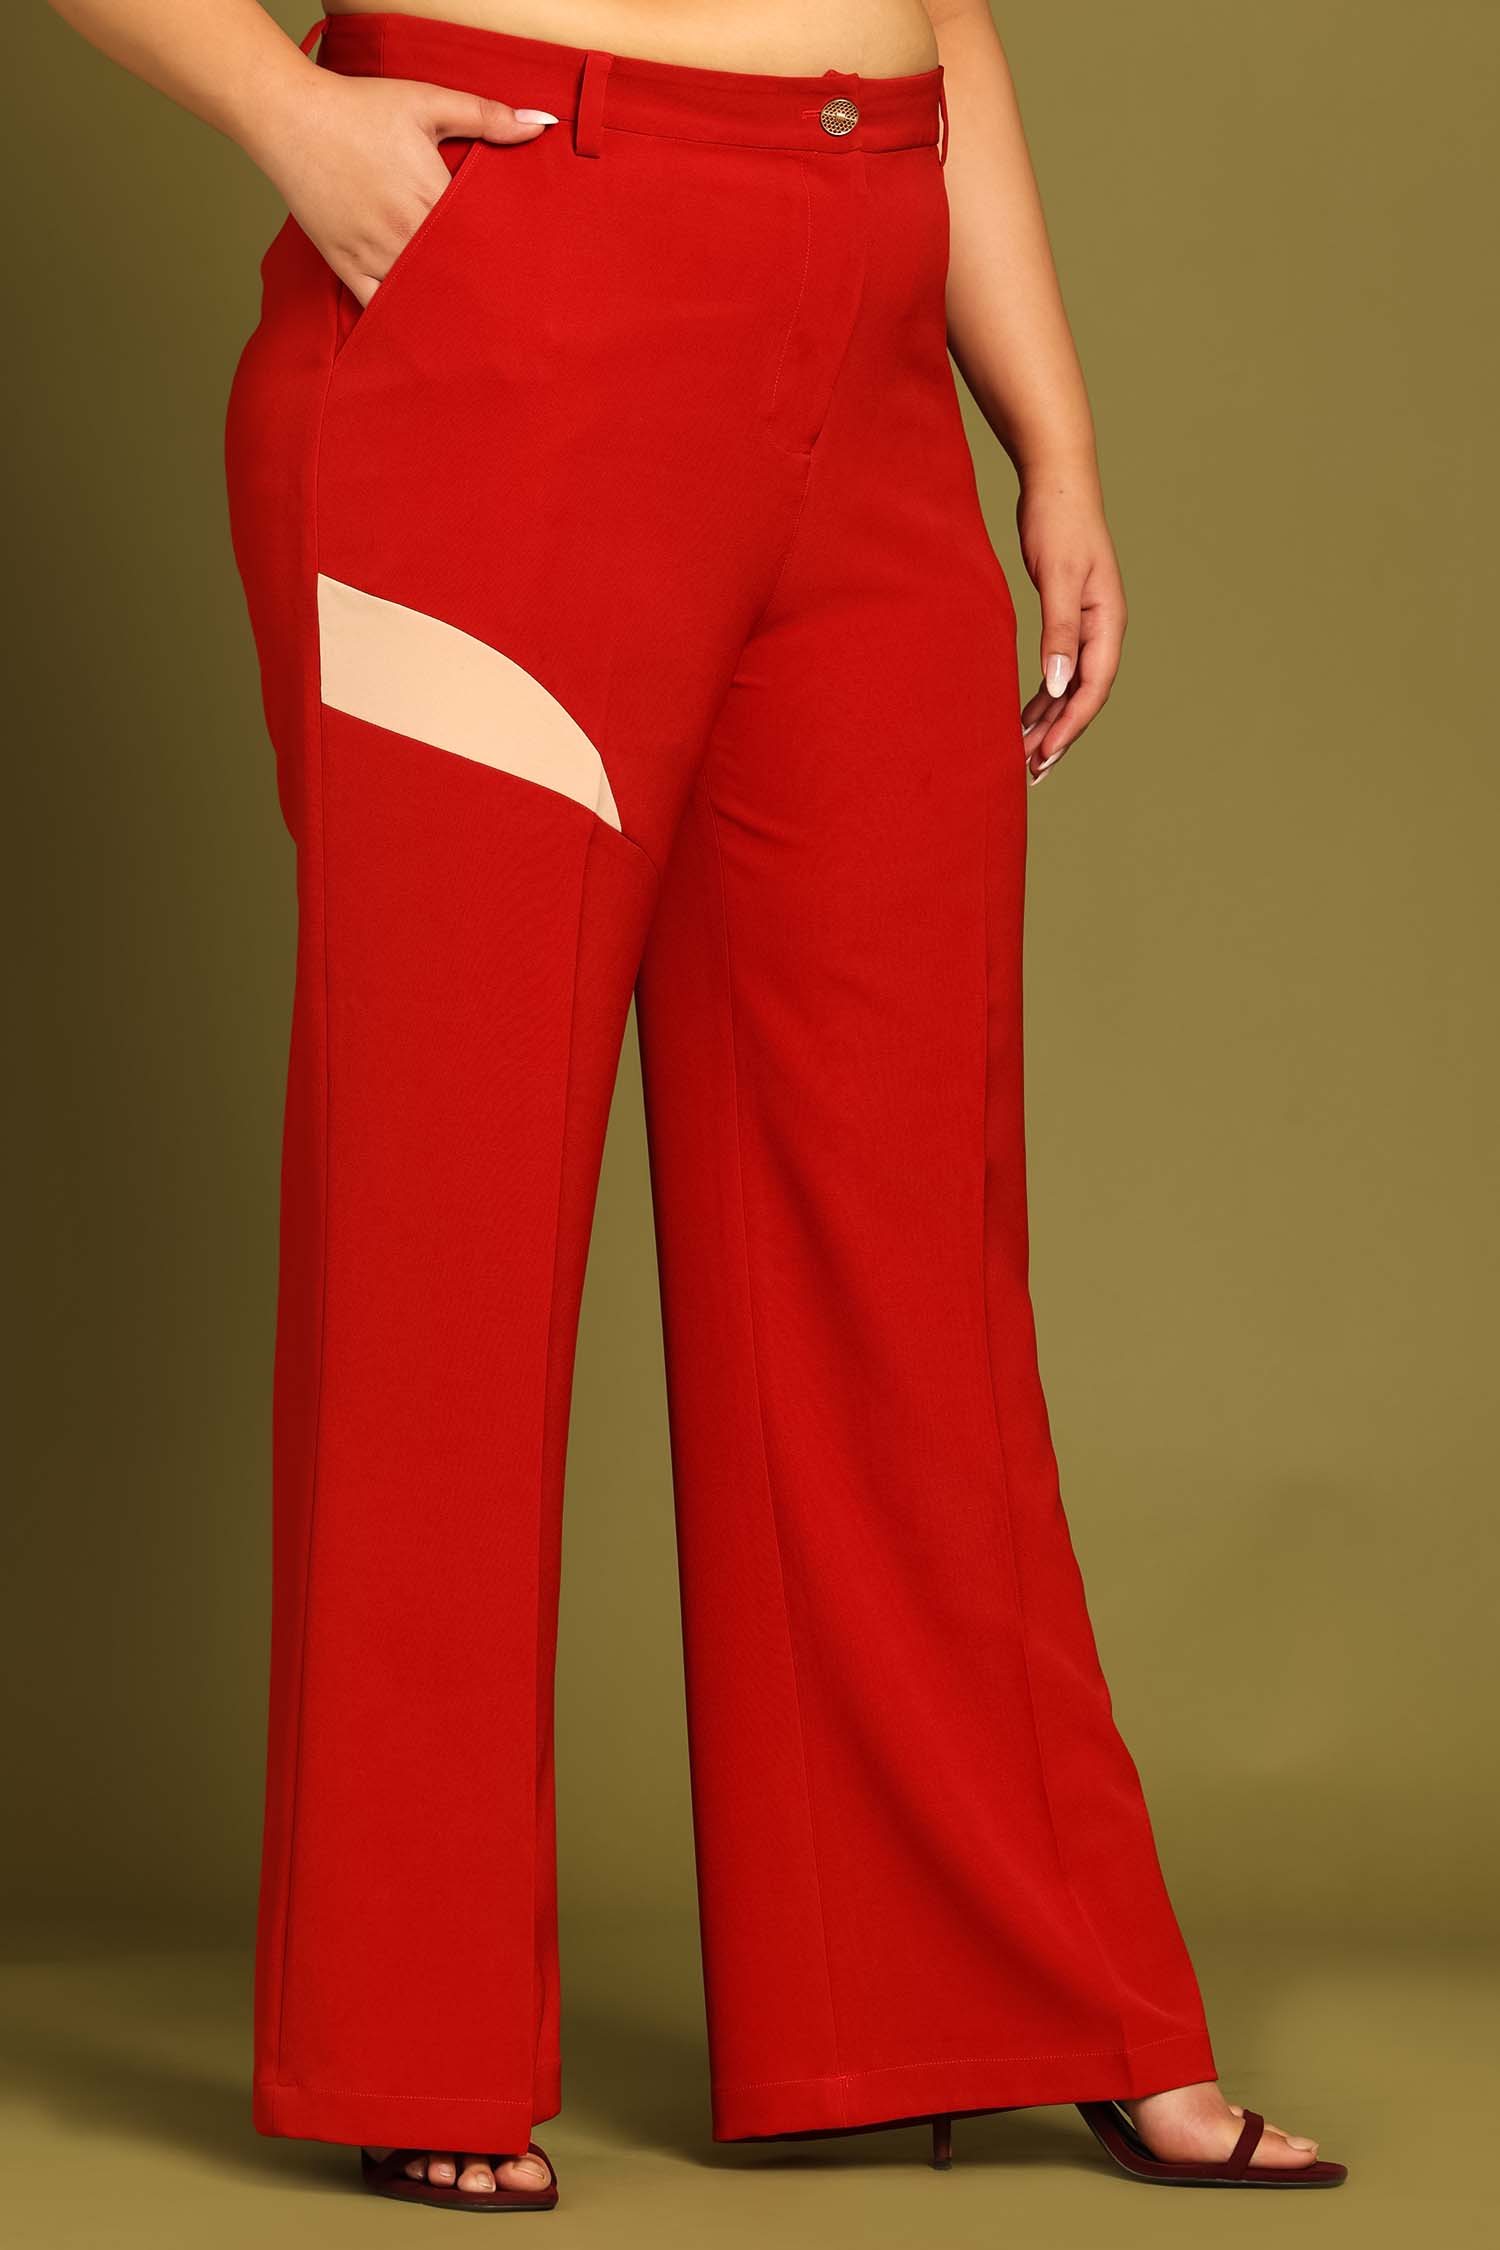 RED Trousers Women/ Pants Women/ High Waist Trousers/ Wrap Cotton Pants/  Loose Pants/ Pants Skirt/ Elegant Skirt Pants/pants With Pockets - Etsy